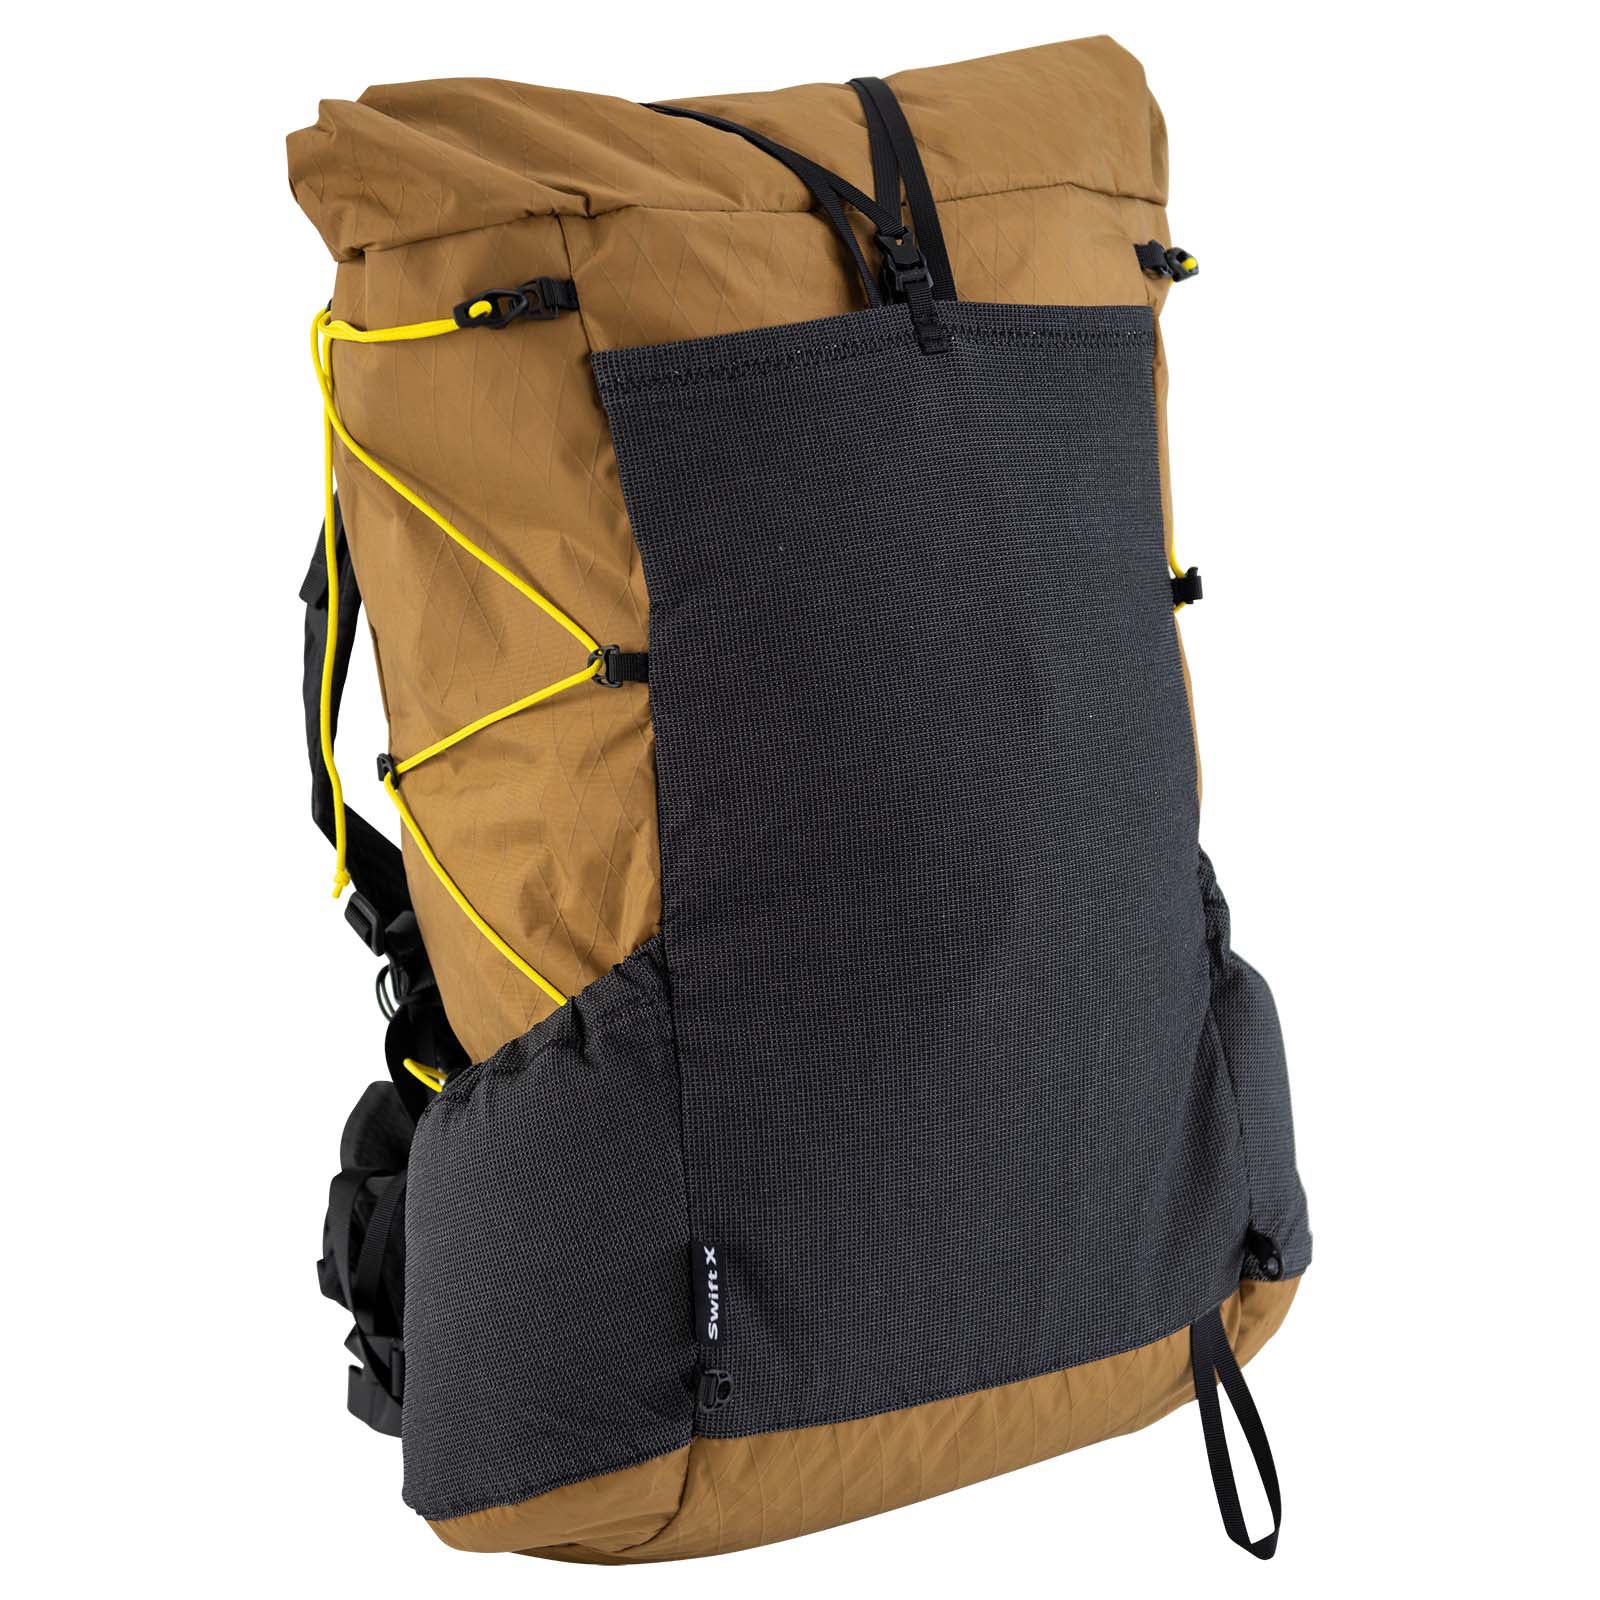 Swift X 50L Ultralight Hiking Backpack Six Moon Designs